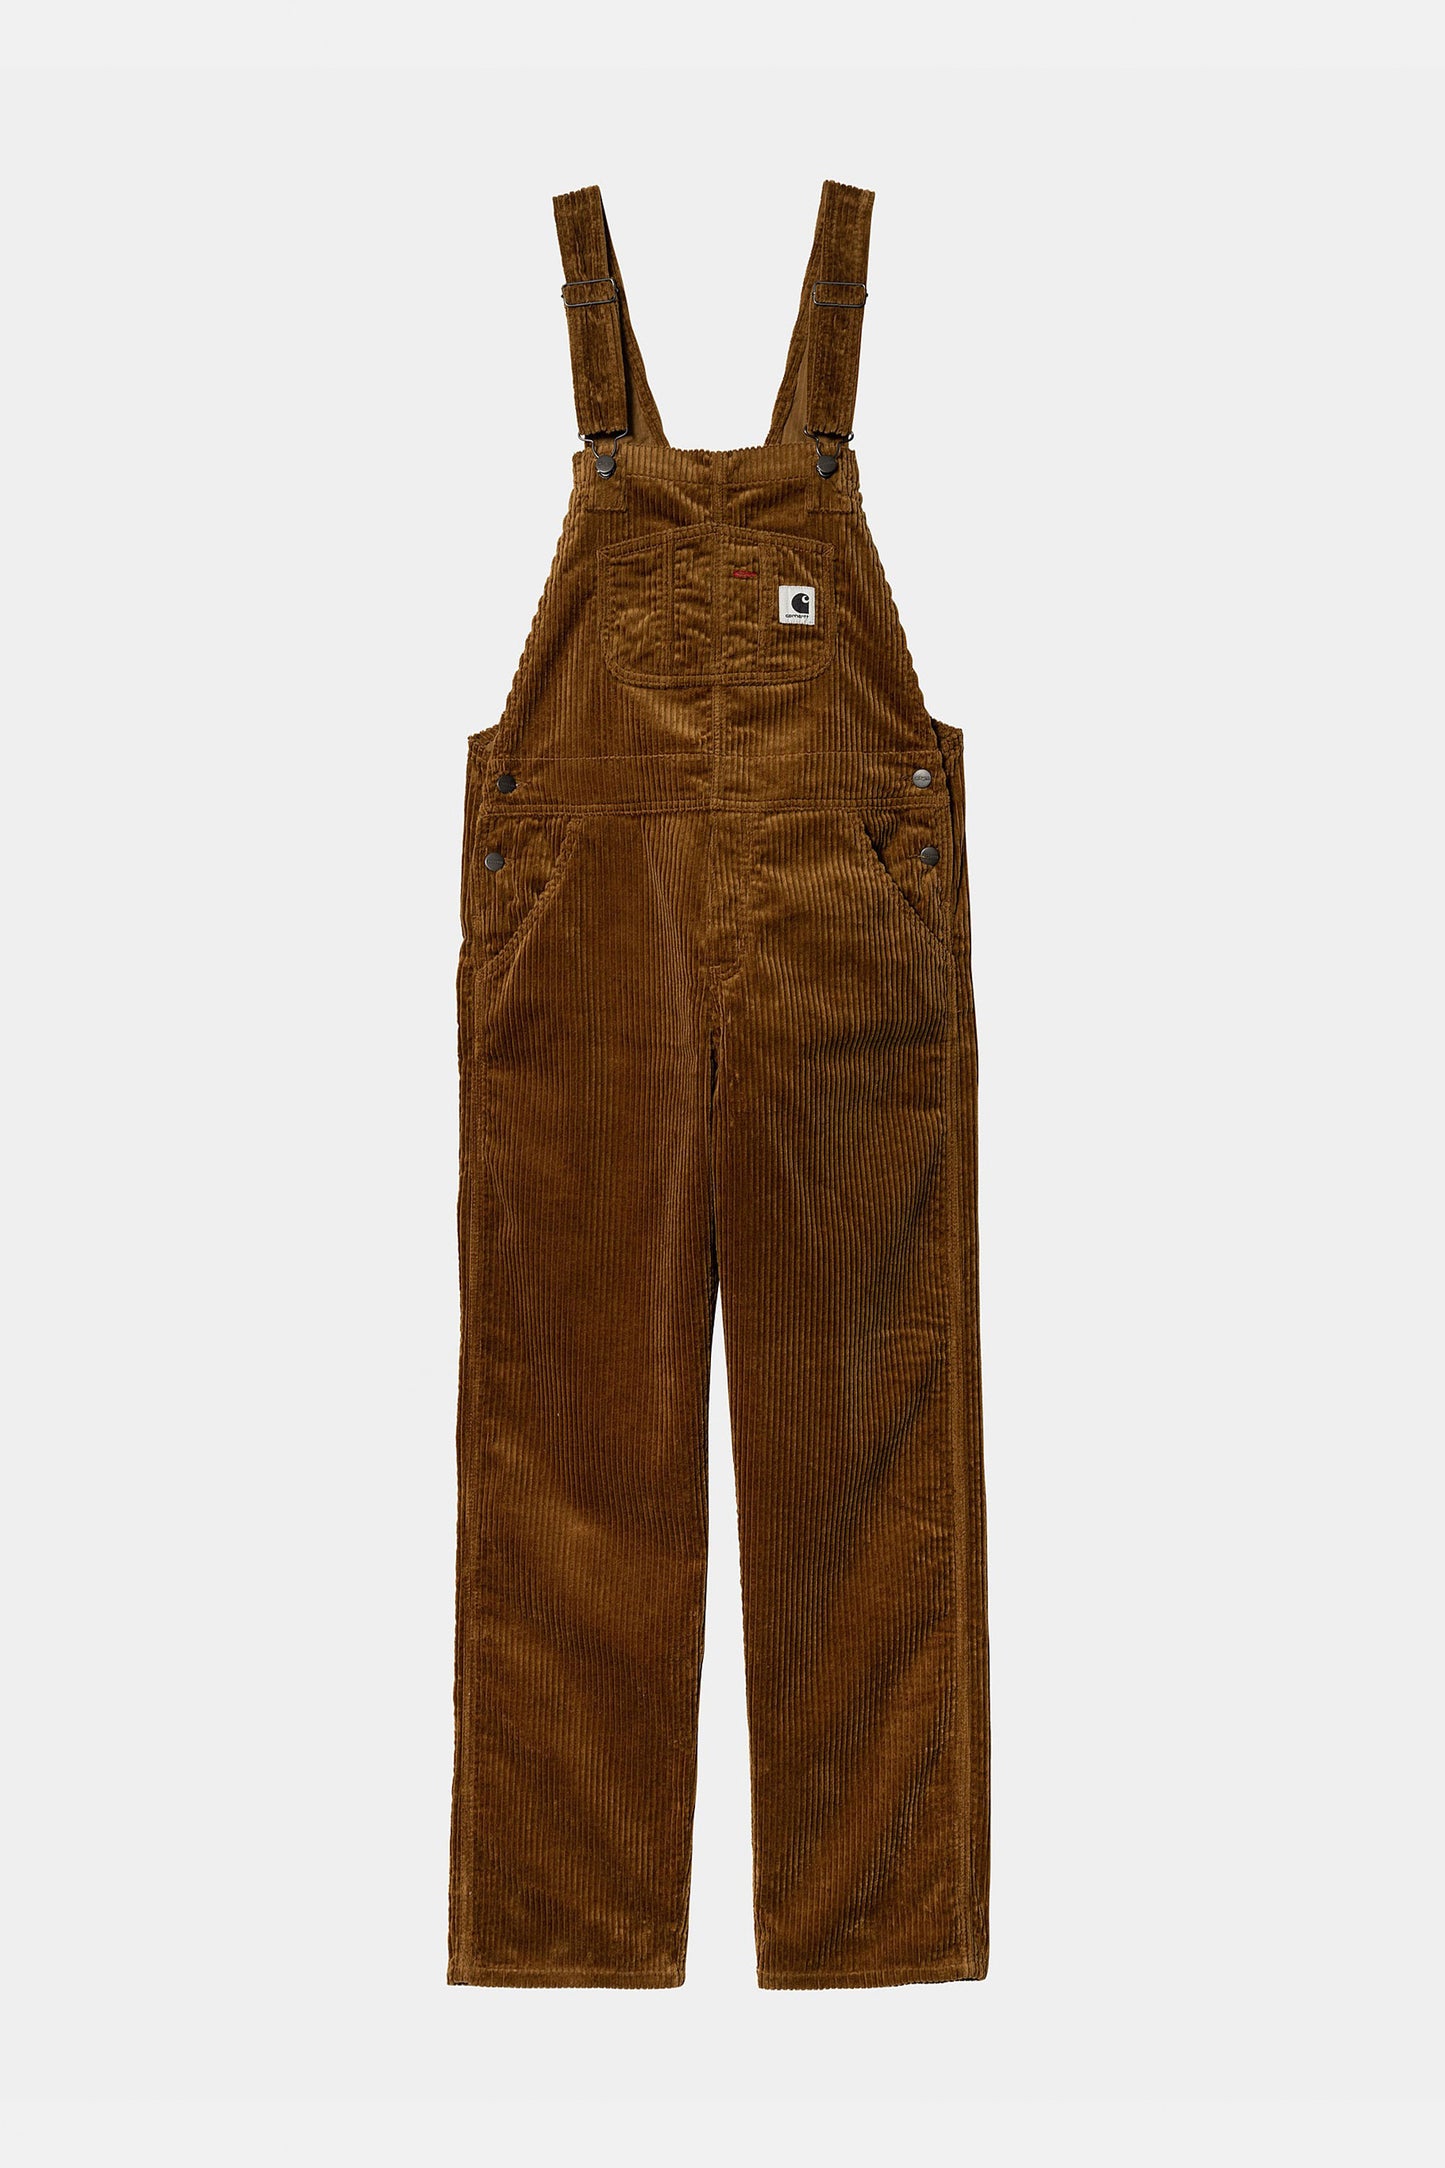 Pukas-Surf-Shop-Carhartt-Jumpsuit-W_-Bib-Overall-Straight-deep-hamilton-brown  2000 × 3000px